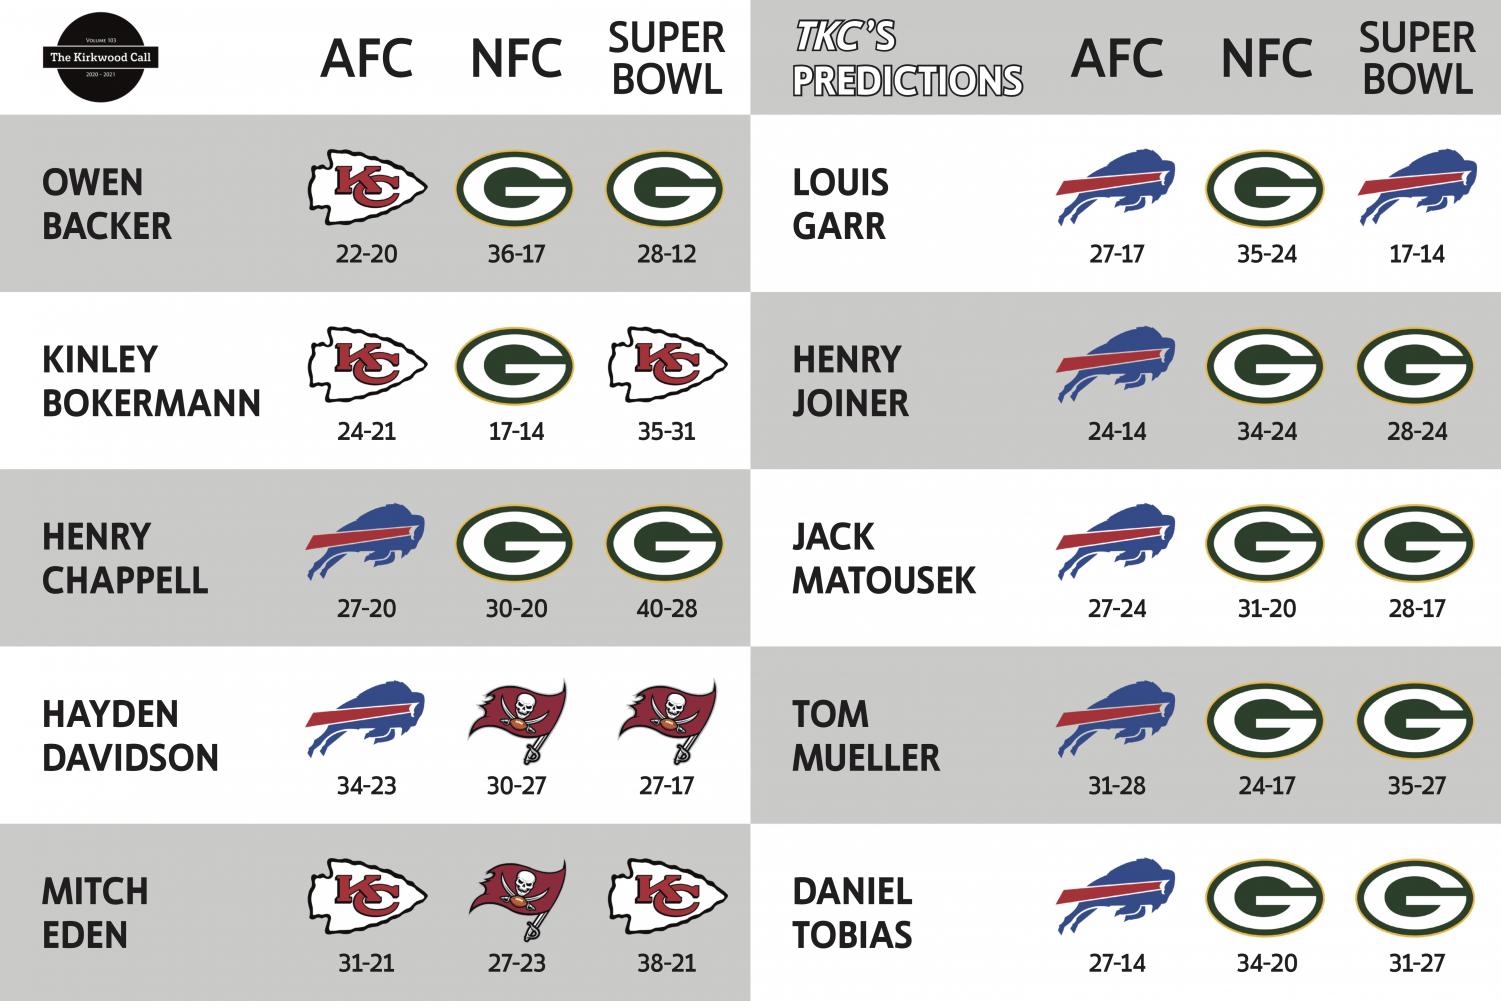 2021-2022 NFL Playoff Predictions! Predicting Super Bowl Champions